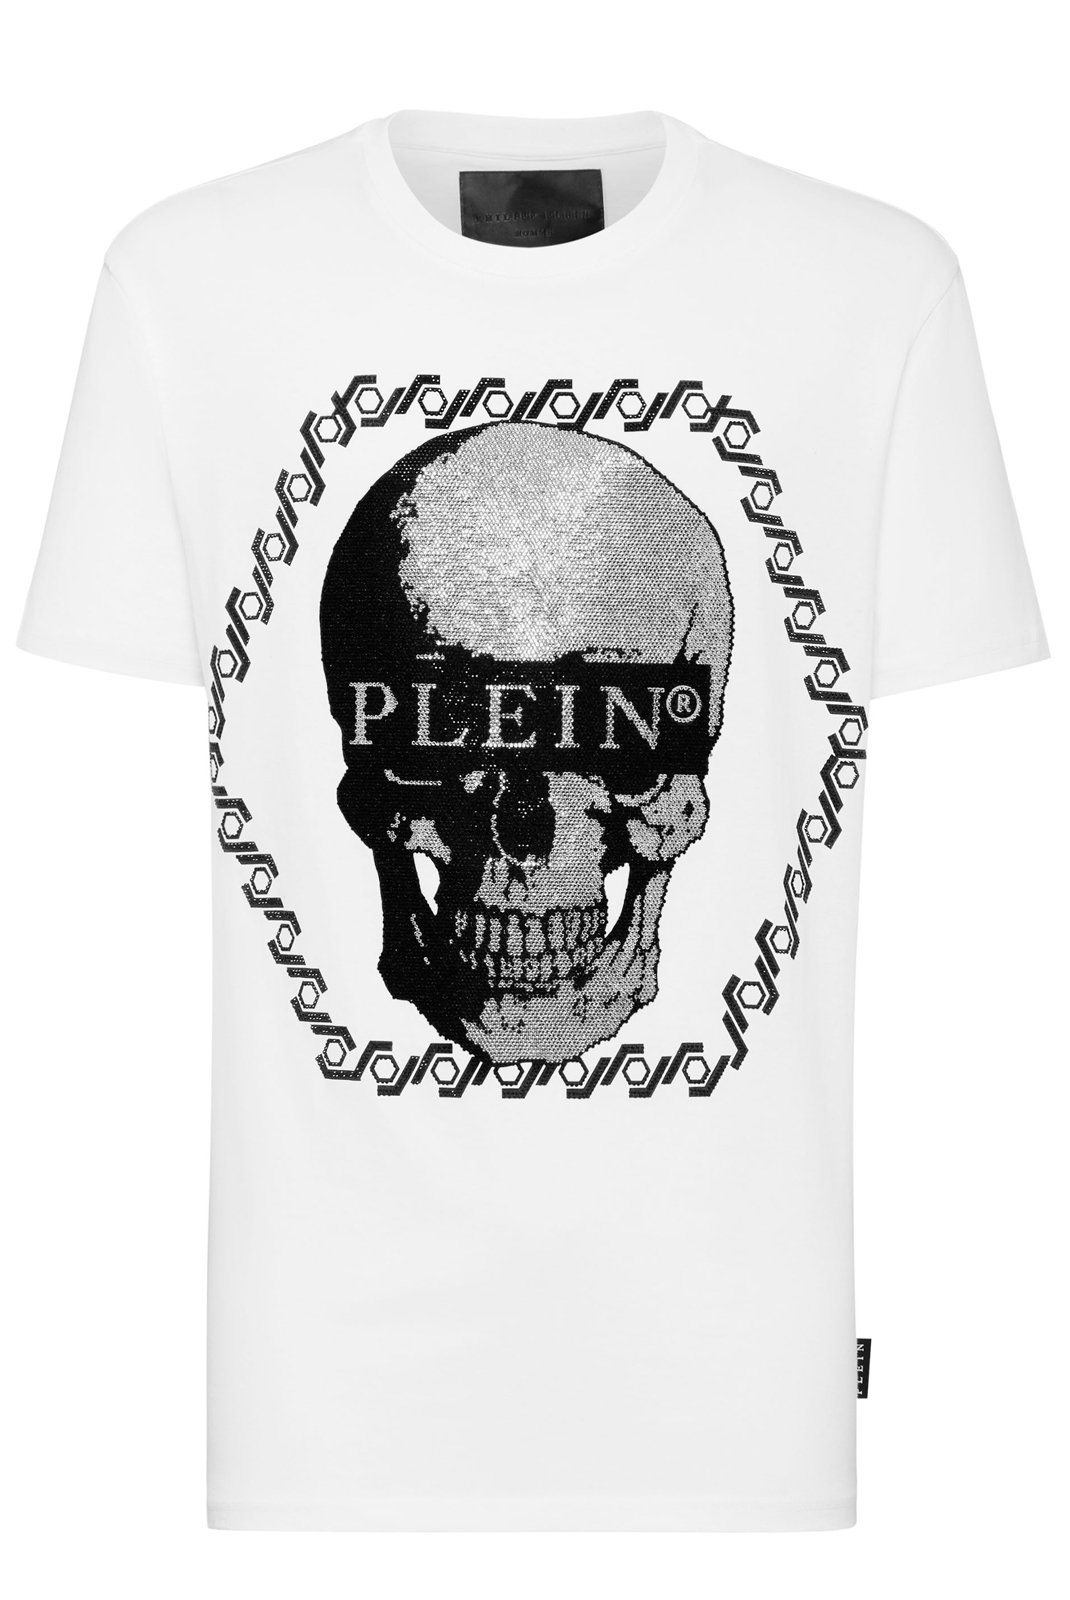 Tee-shirts  Philipp plein MTK5150 PJY002N 01 WHITE